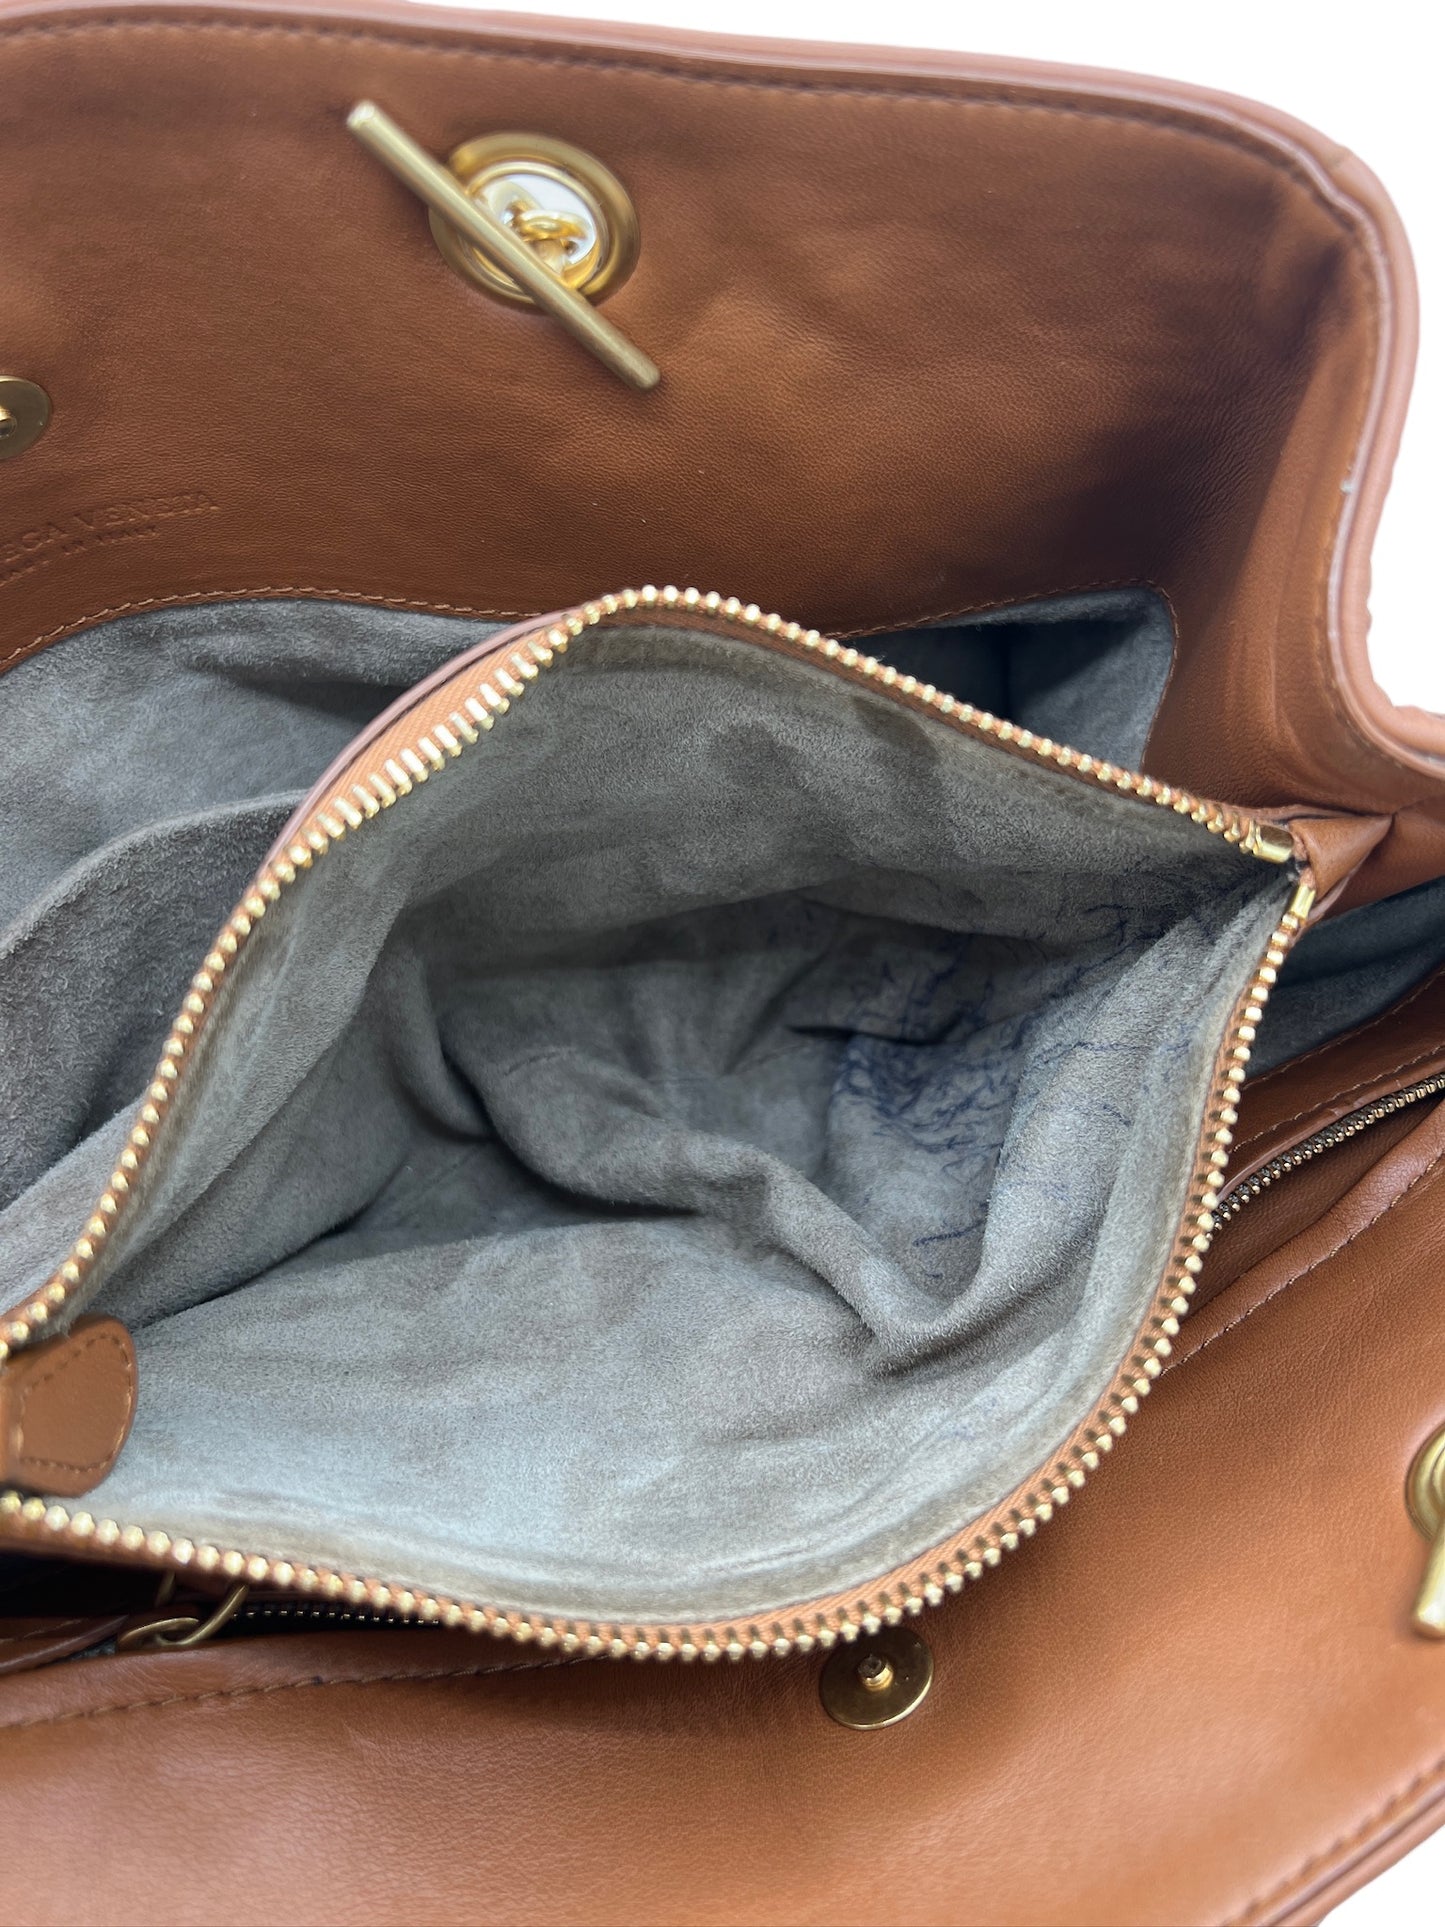 BOTTEGA VENETA - Intrecciato Leather Tote Bag